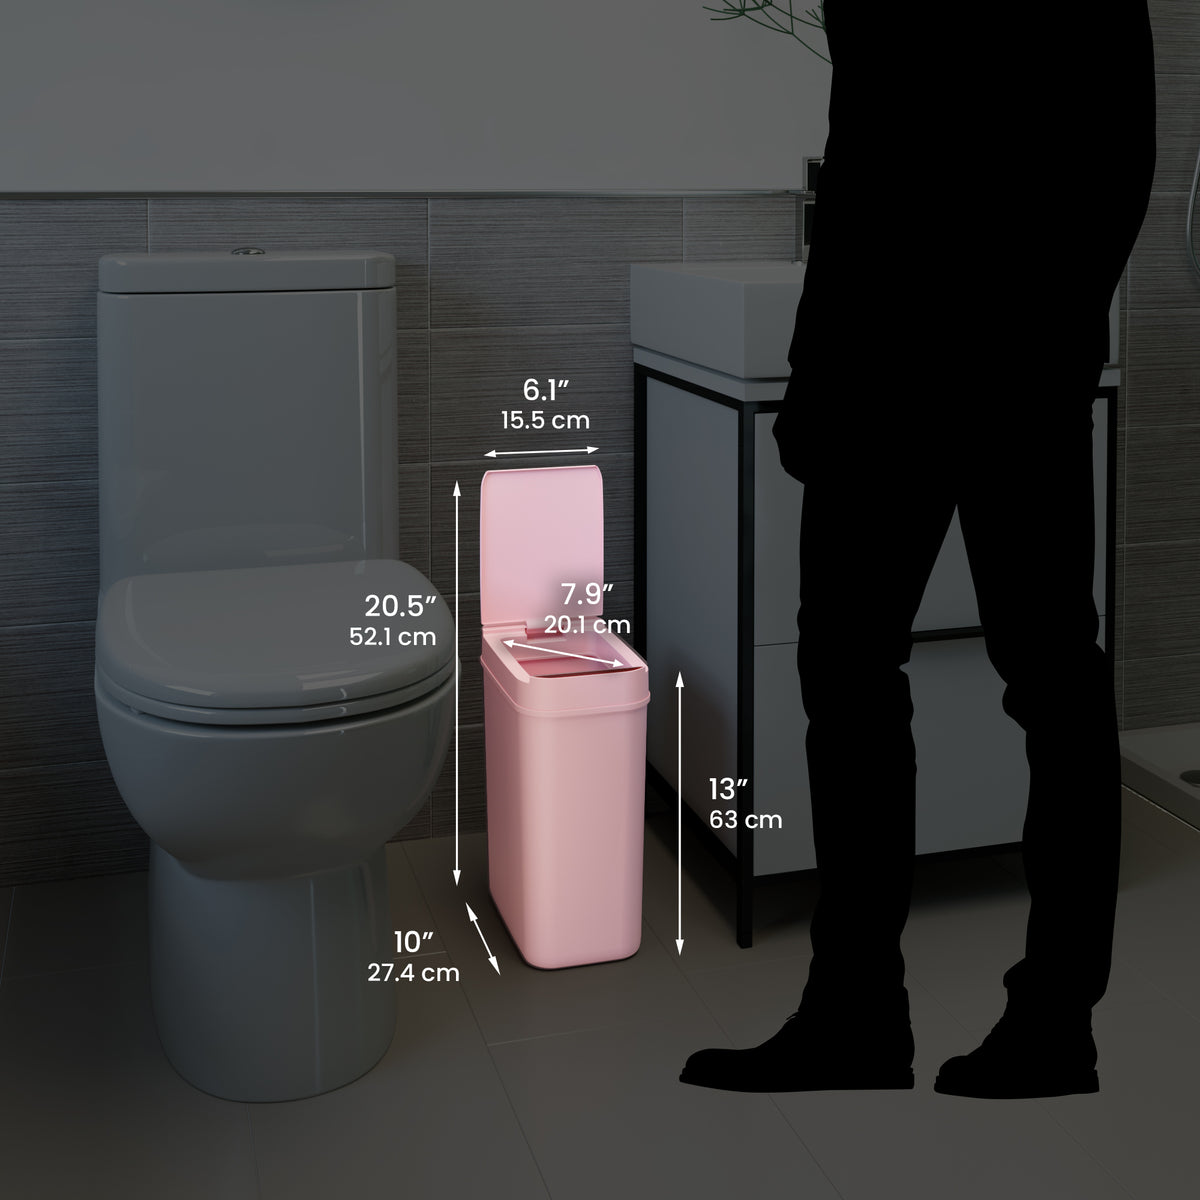 3 Gallon / 10 Liter Plastic Sensor Trash Can (Pink) dimensions